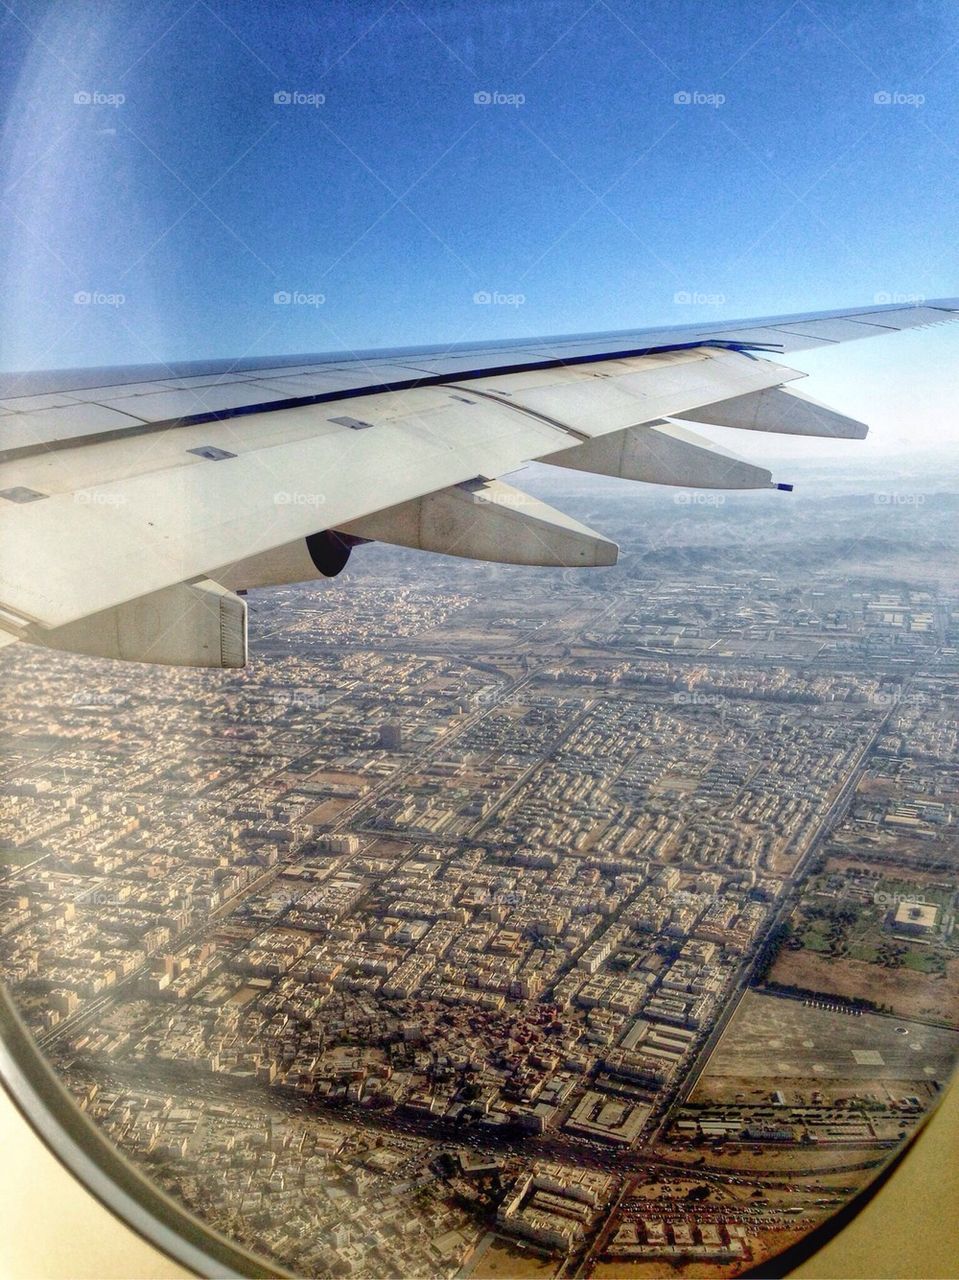 Landing at Jeddah airport